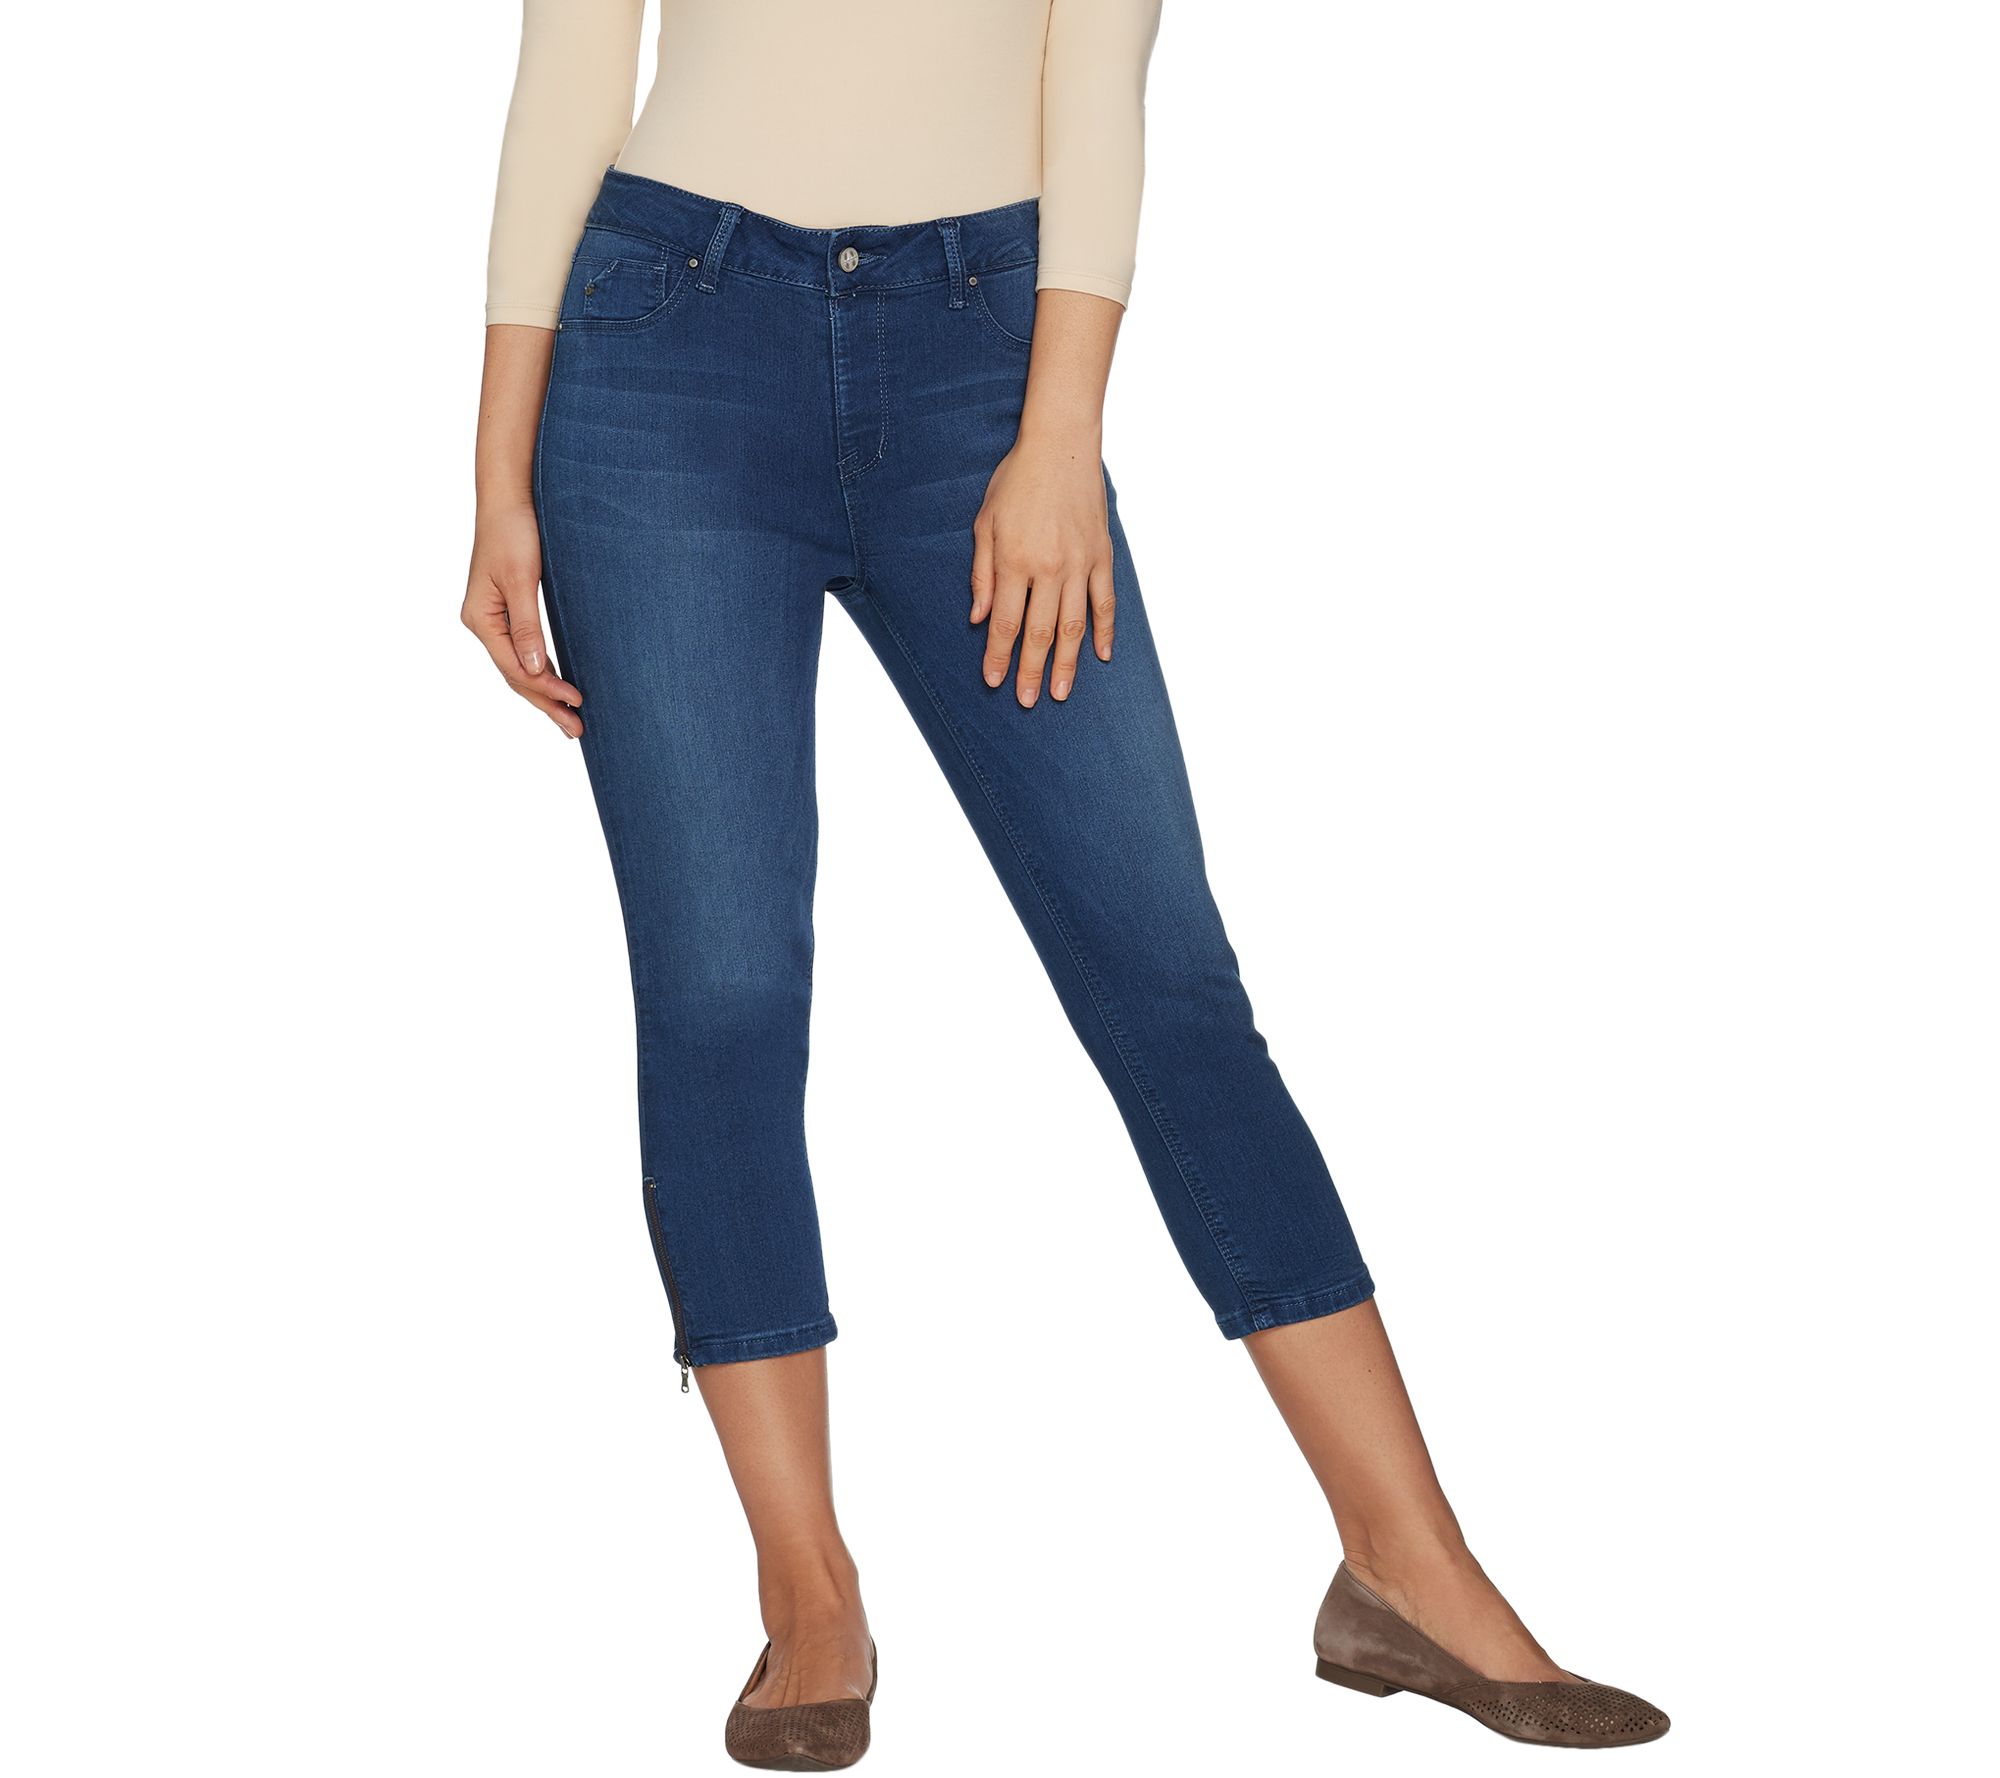 capri length jeans